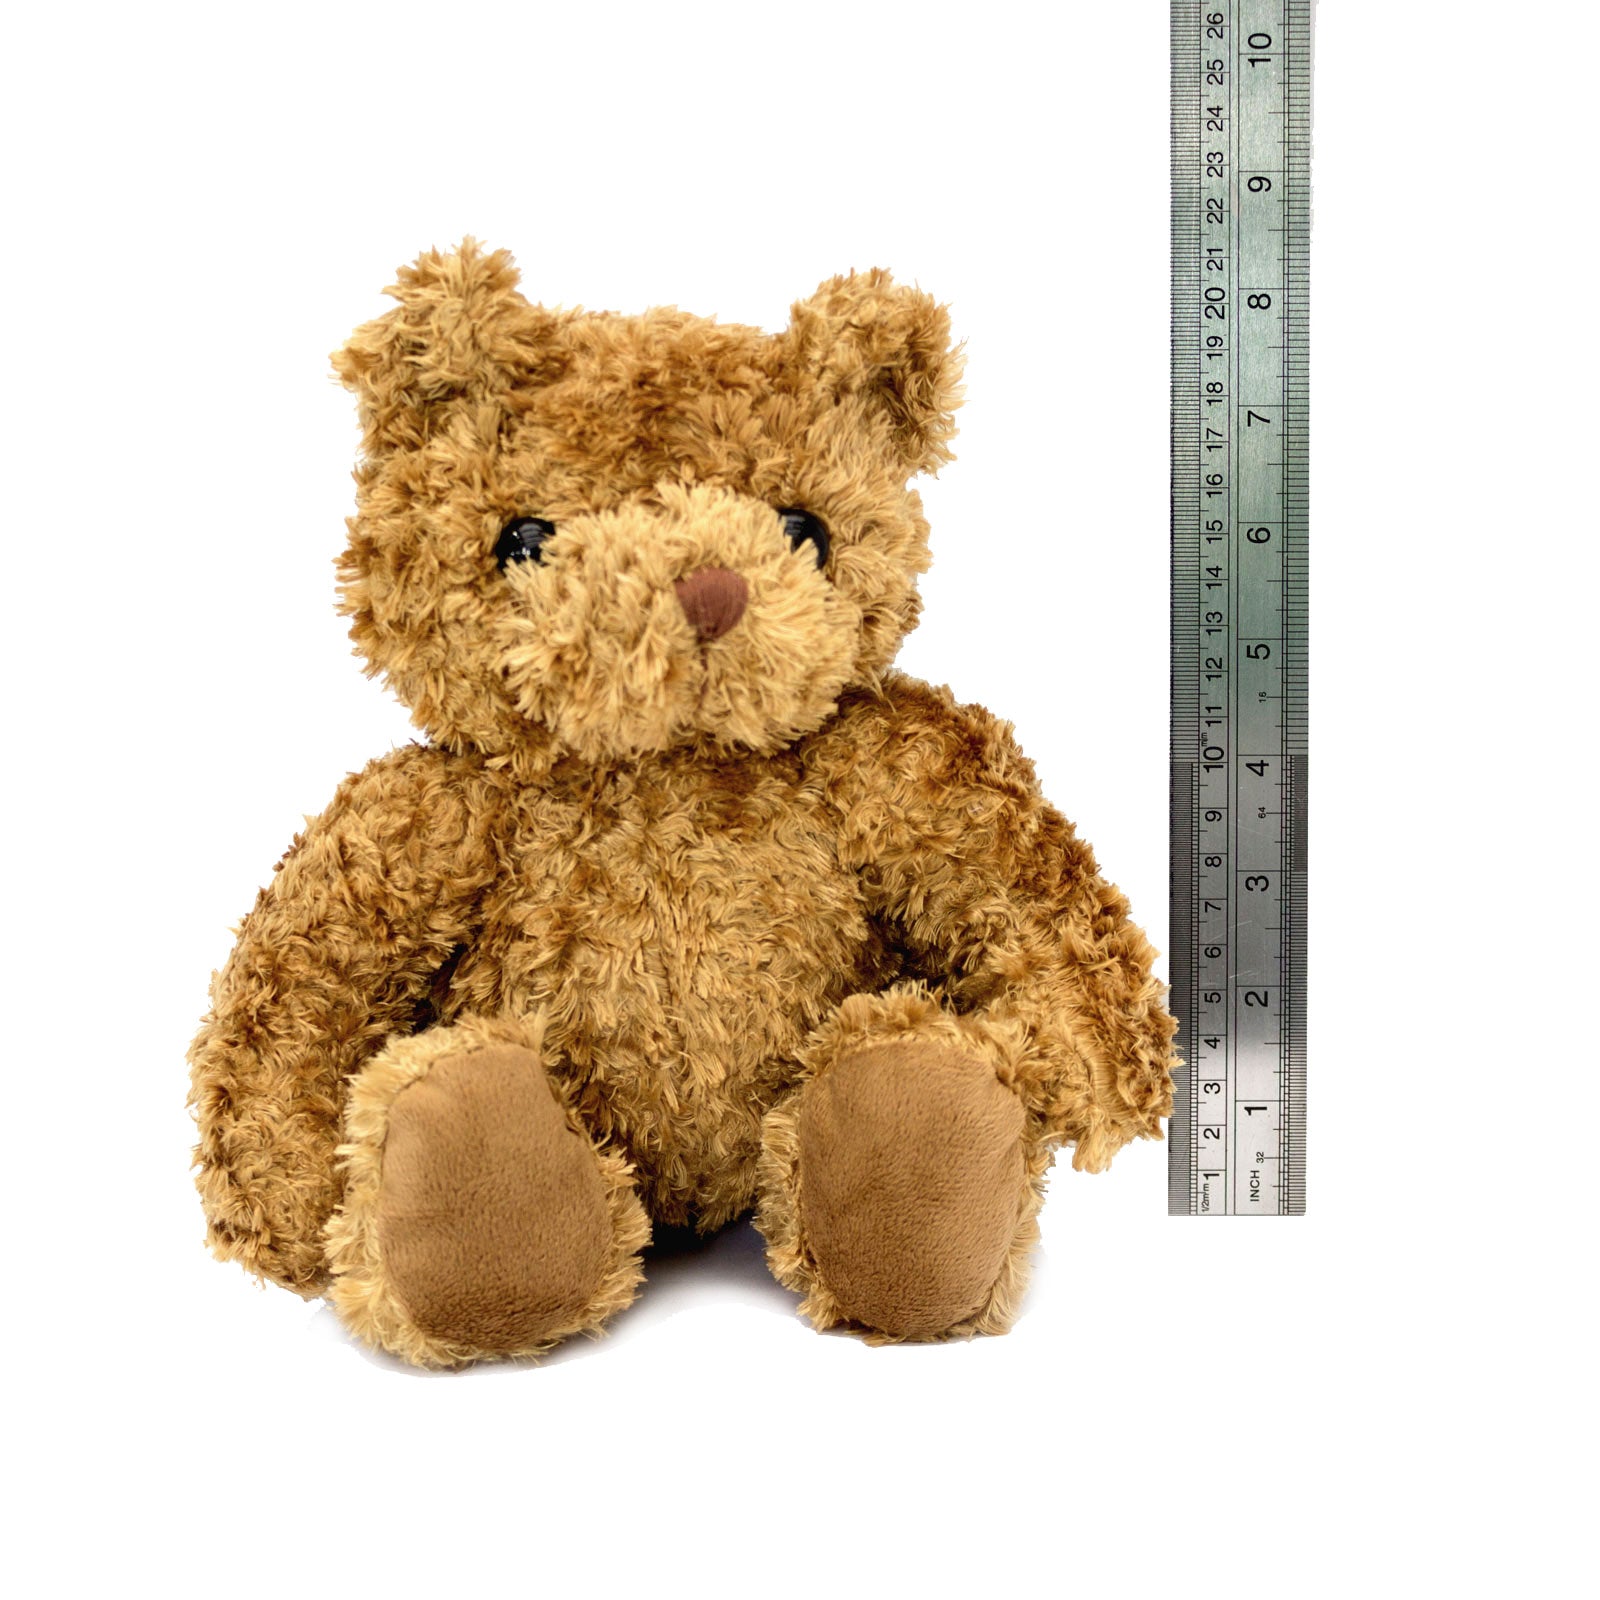 Get Well Soon Acacia - Teddy Bear